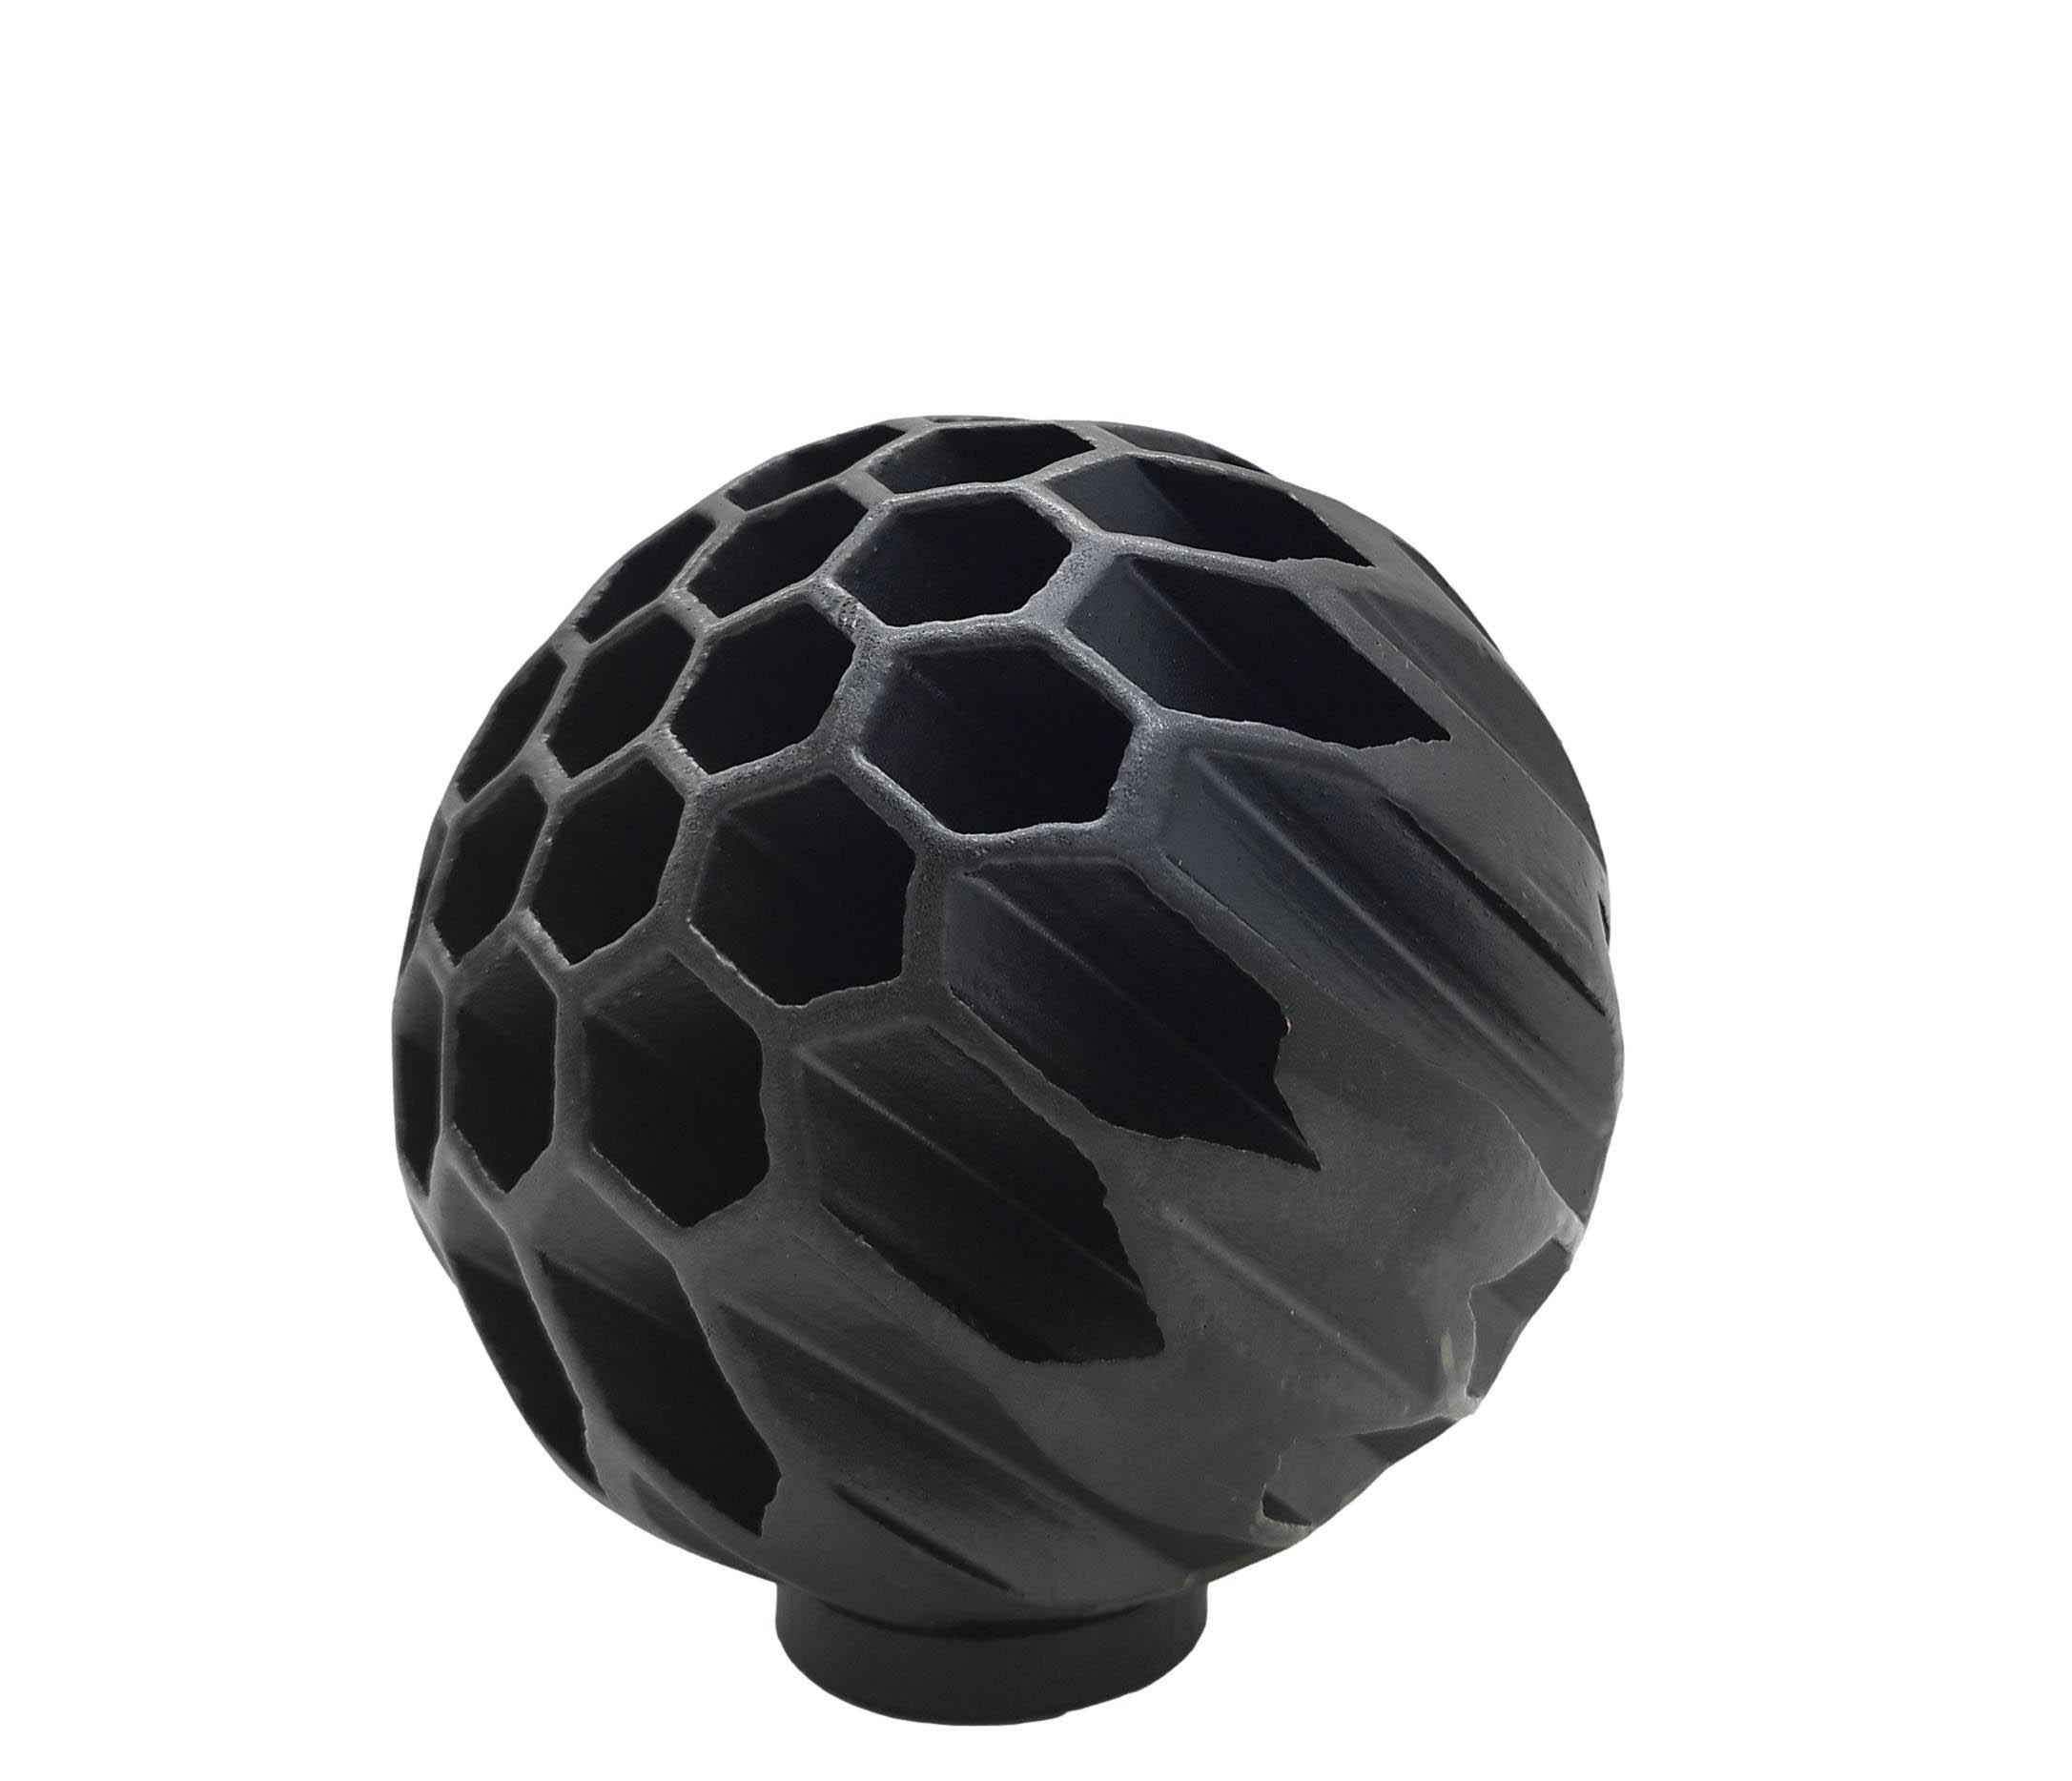 Italian Alessio Tasca Anthracite Ceramic Sphere Sculpture, Italy, 1960s For Sale